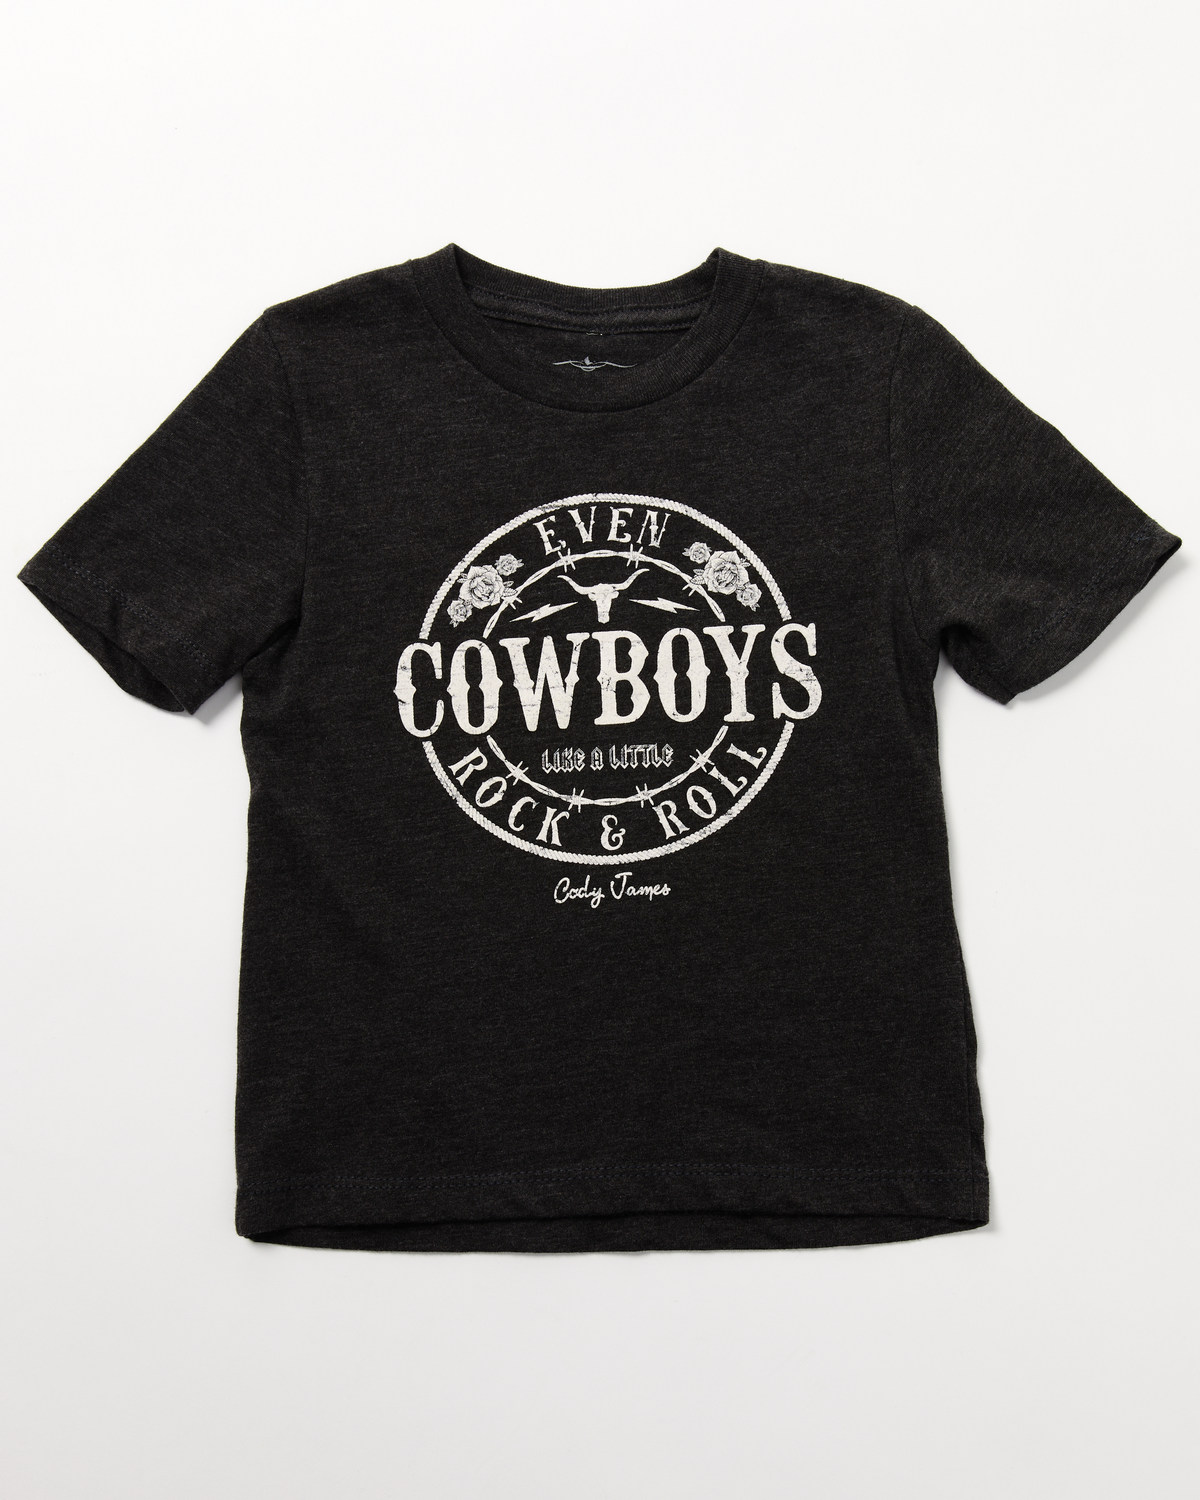 Cody James Toddler Boys' Rock n' Roll Short Sleeve Graphic T-Shirt